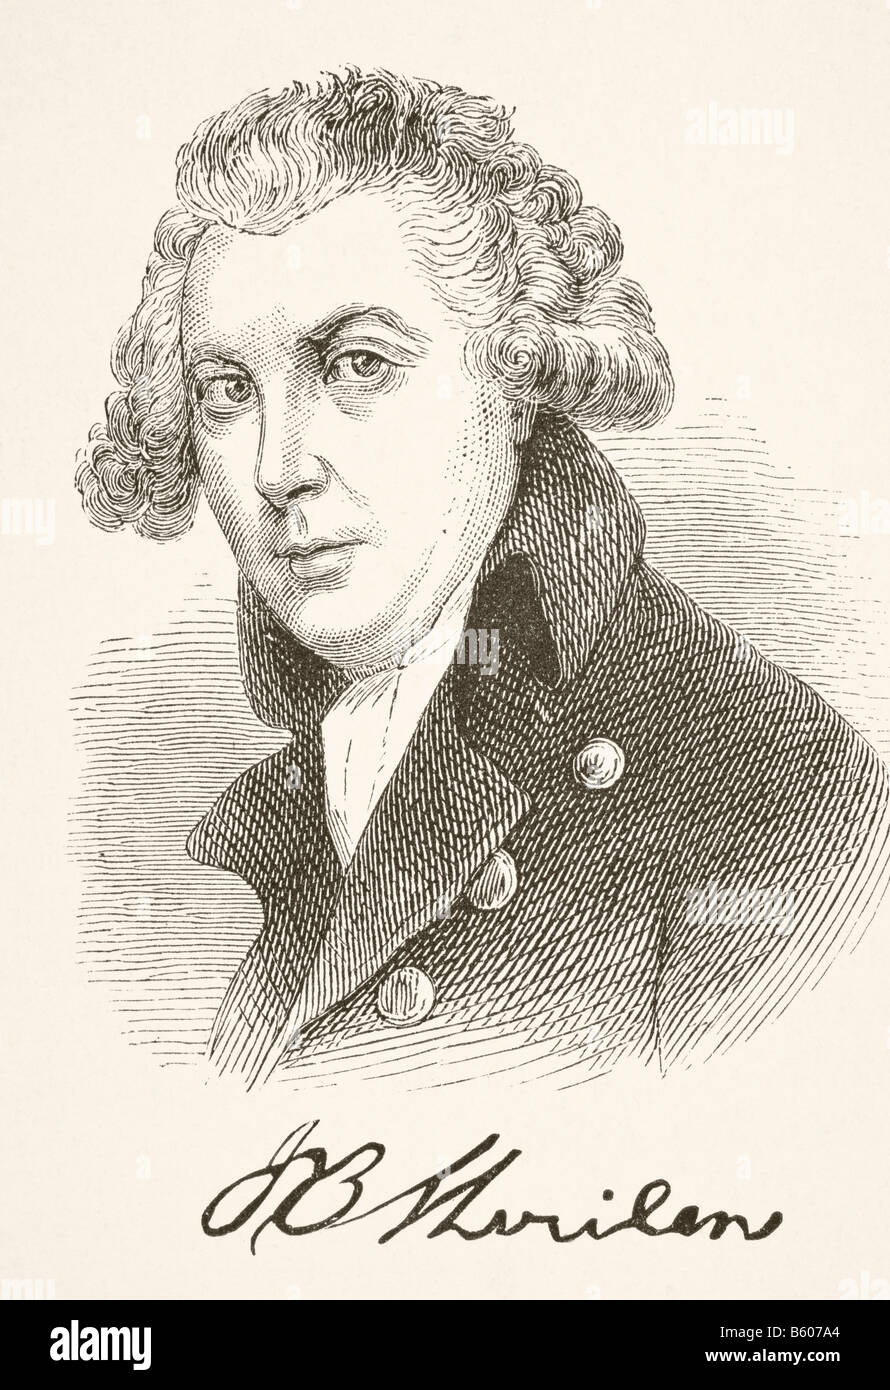 Richard Brinsley Sheridan, 1751 - 1816. Anglo Irish dramatist and politician. His portrait and signature Stock Photo